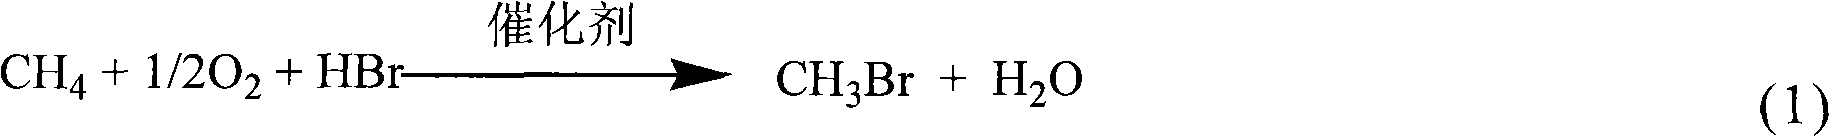 Method for preparing methyl bromide, high-carbon hydrocarbon, methanol or dimethyl ether by bromine oxidation of methane